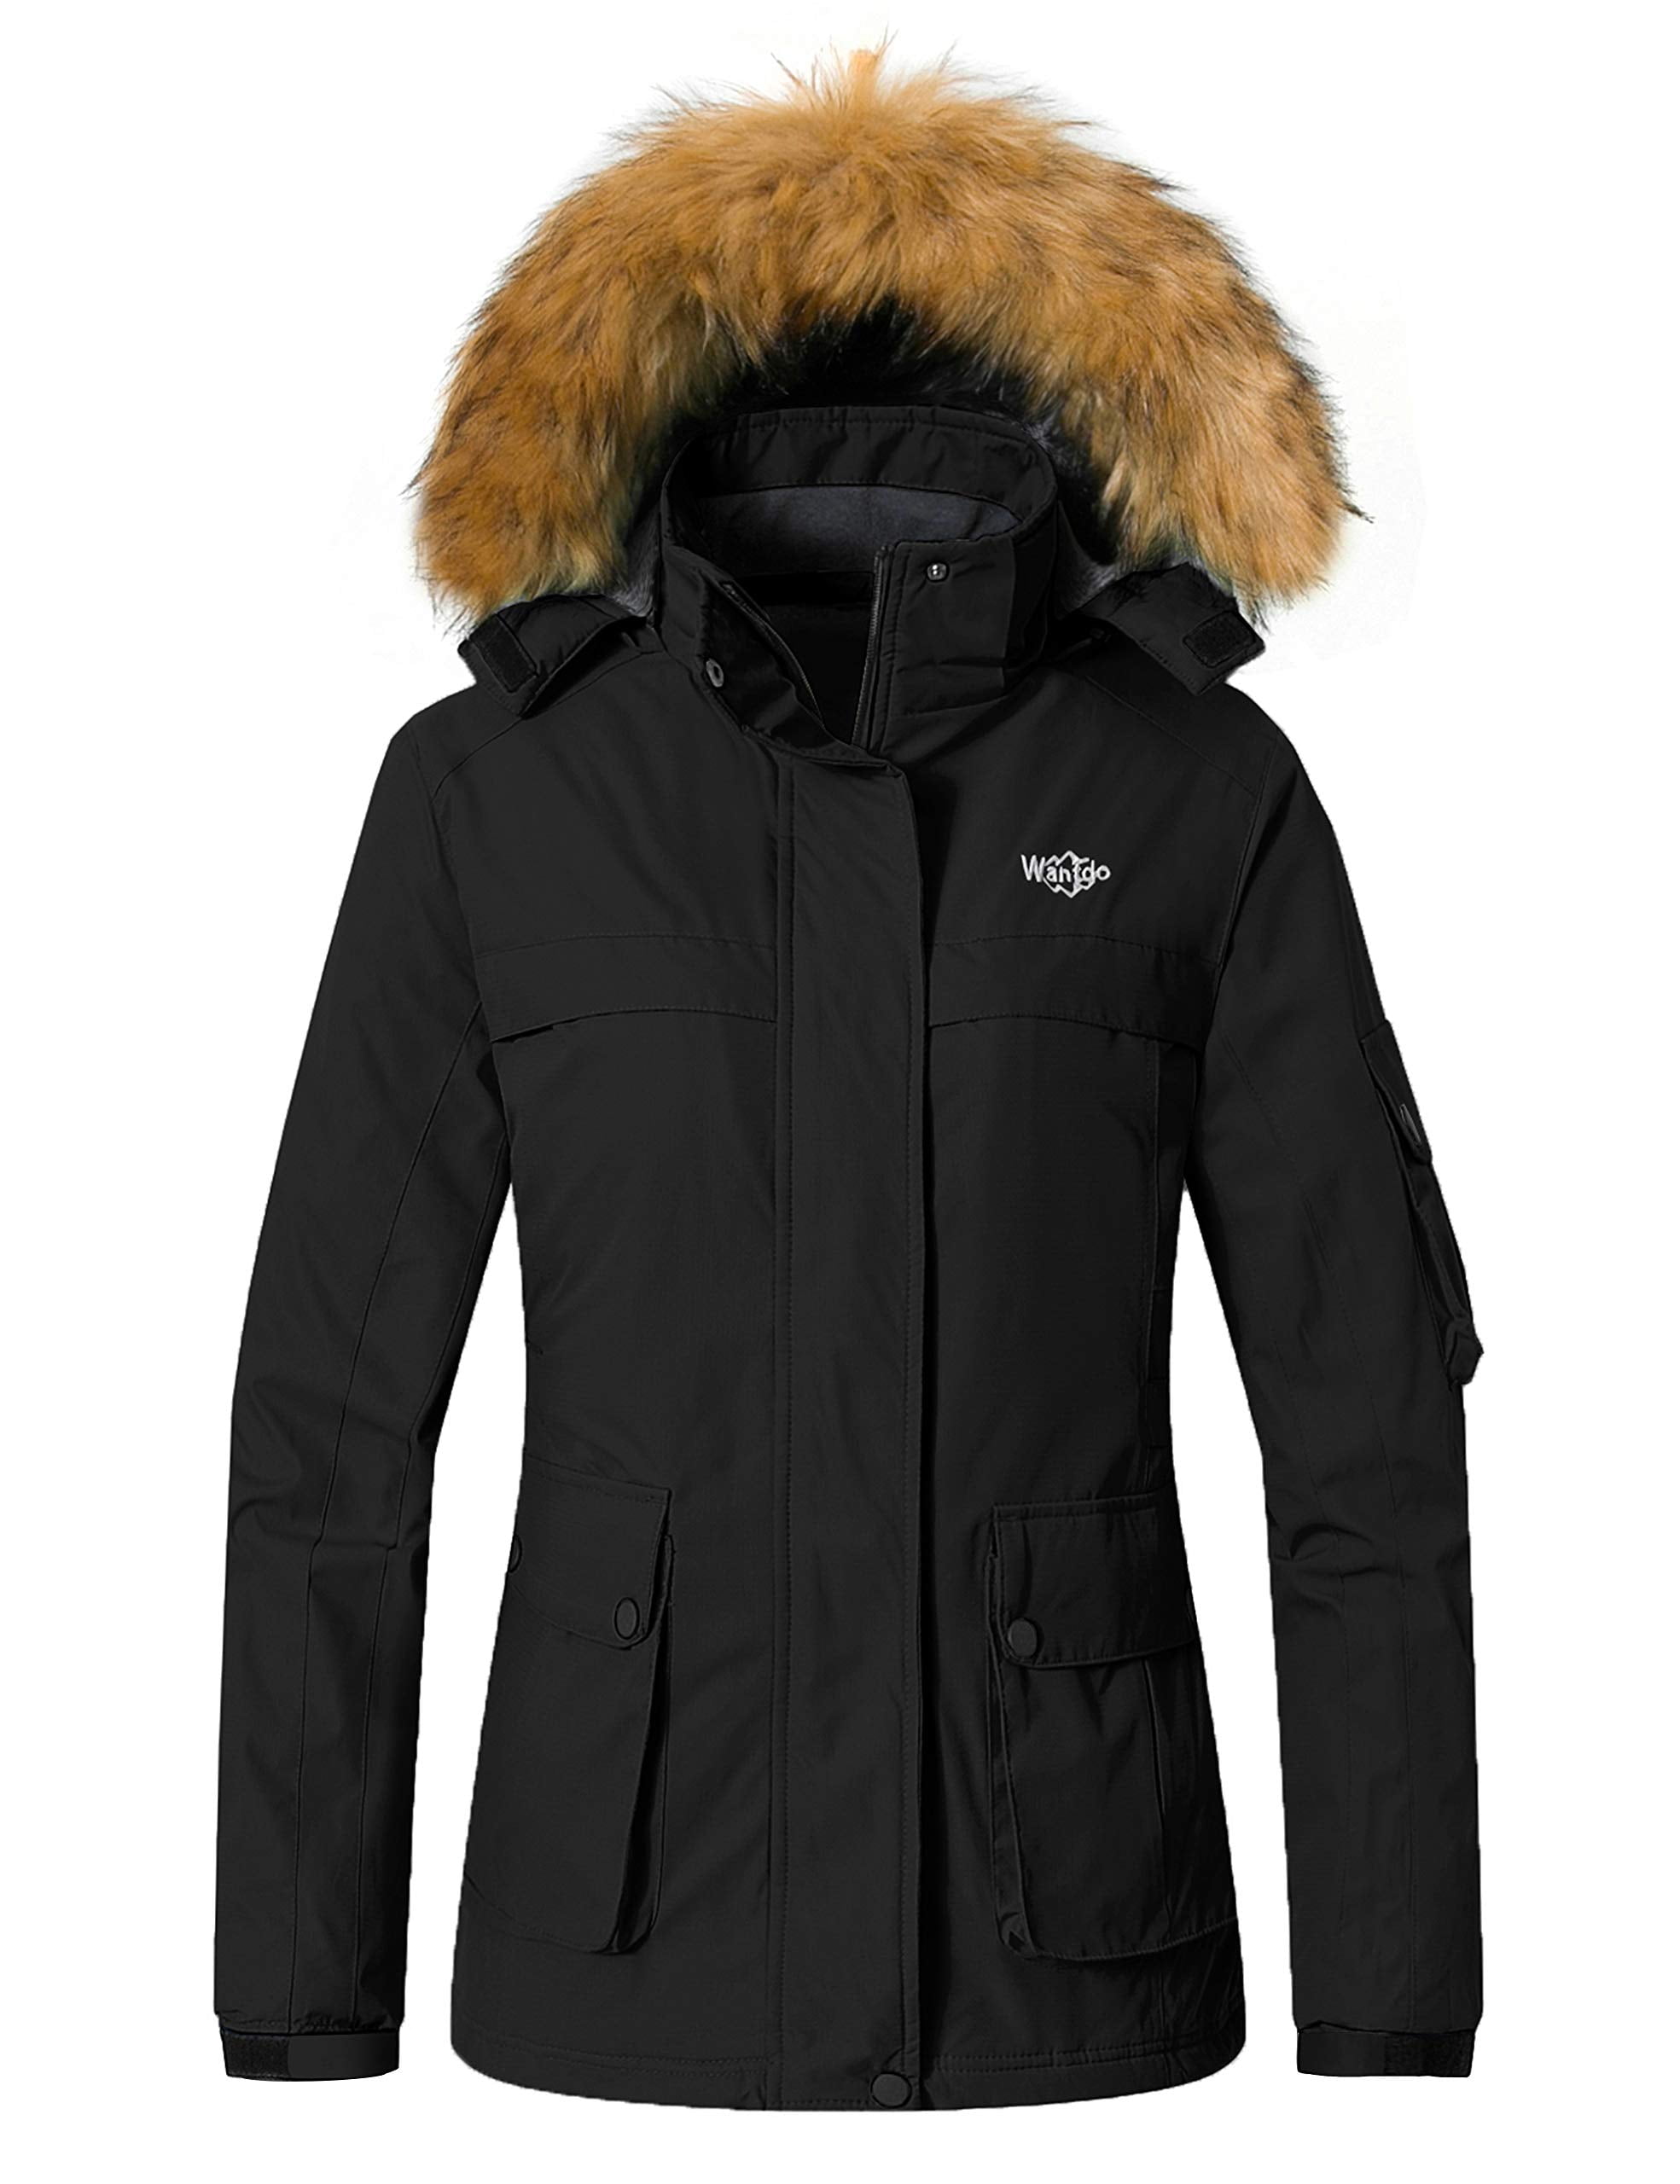 Wantdo Girl's Waterproof Ski Jacket Insulated Snowboarding Jackets Water Resistant Winter Snow Coat